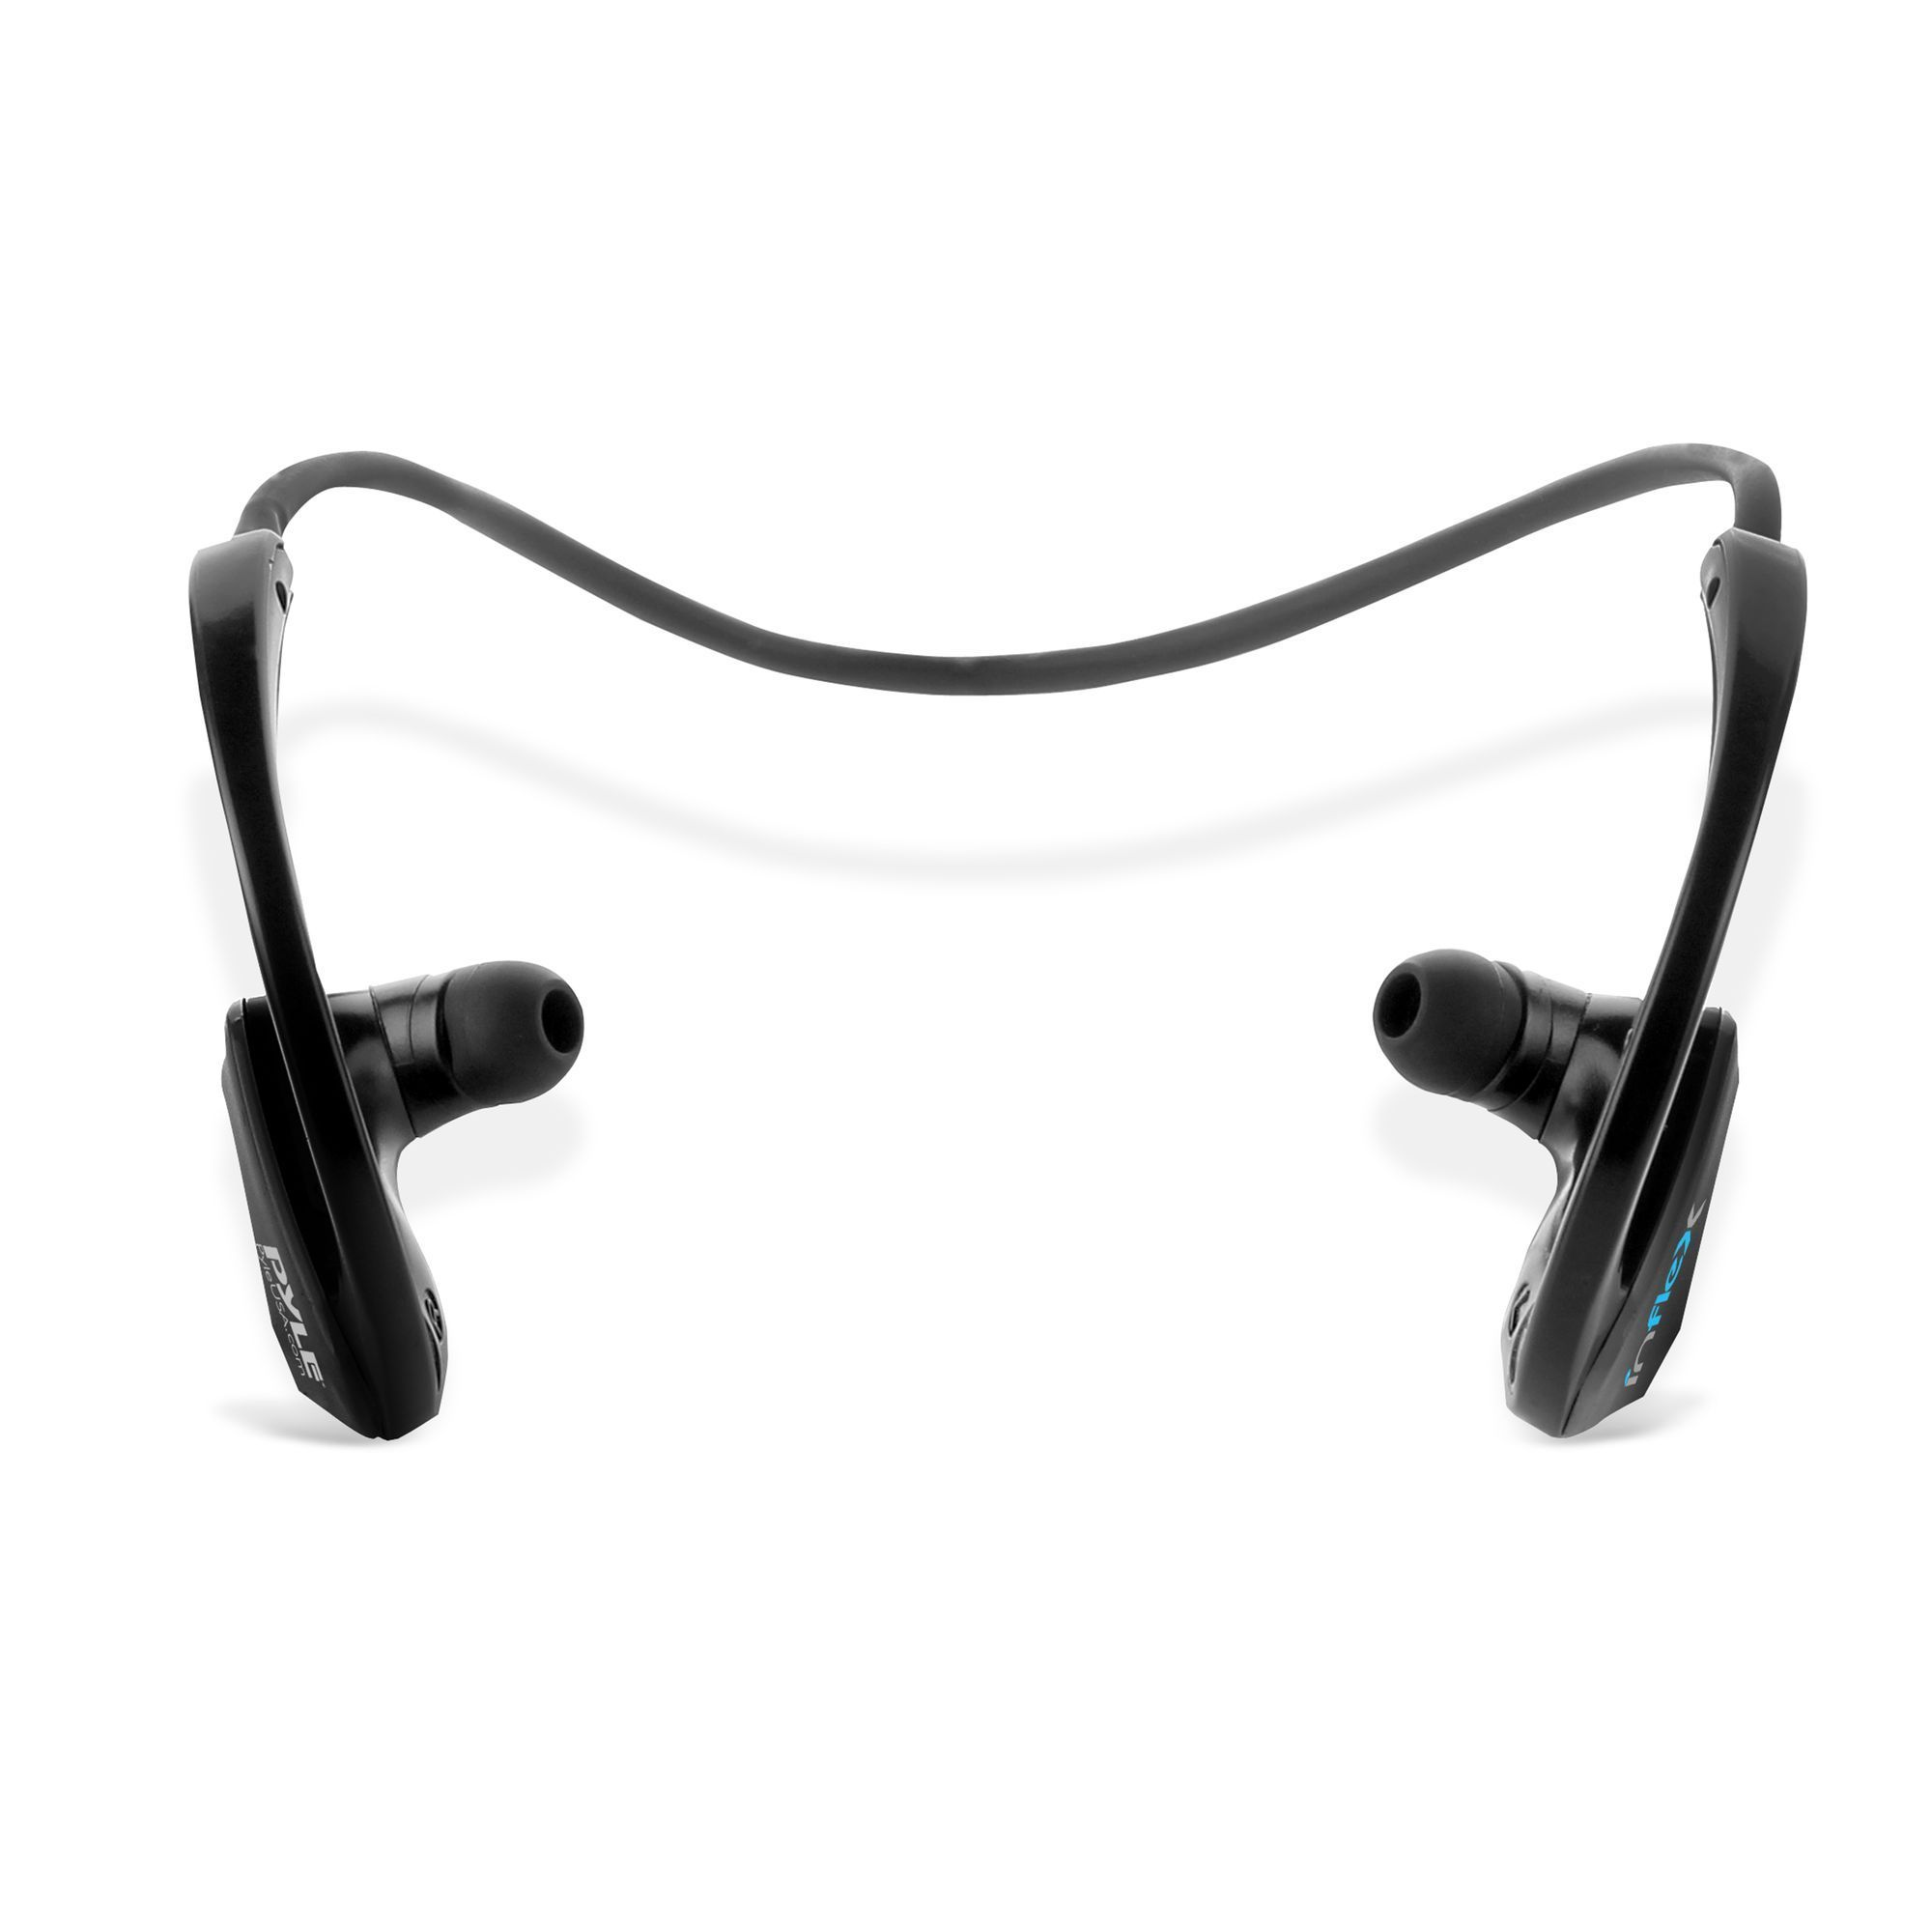 Pyle InFlex Bluetooth MP3 Player Sports Headphones, Waterproof, Swimming Headphones, 8Gb Memory (PSWP9BTBK)